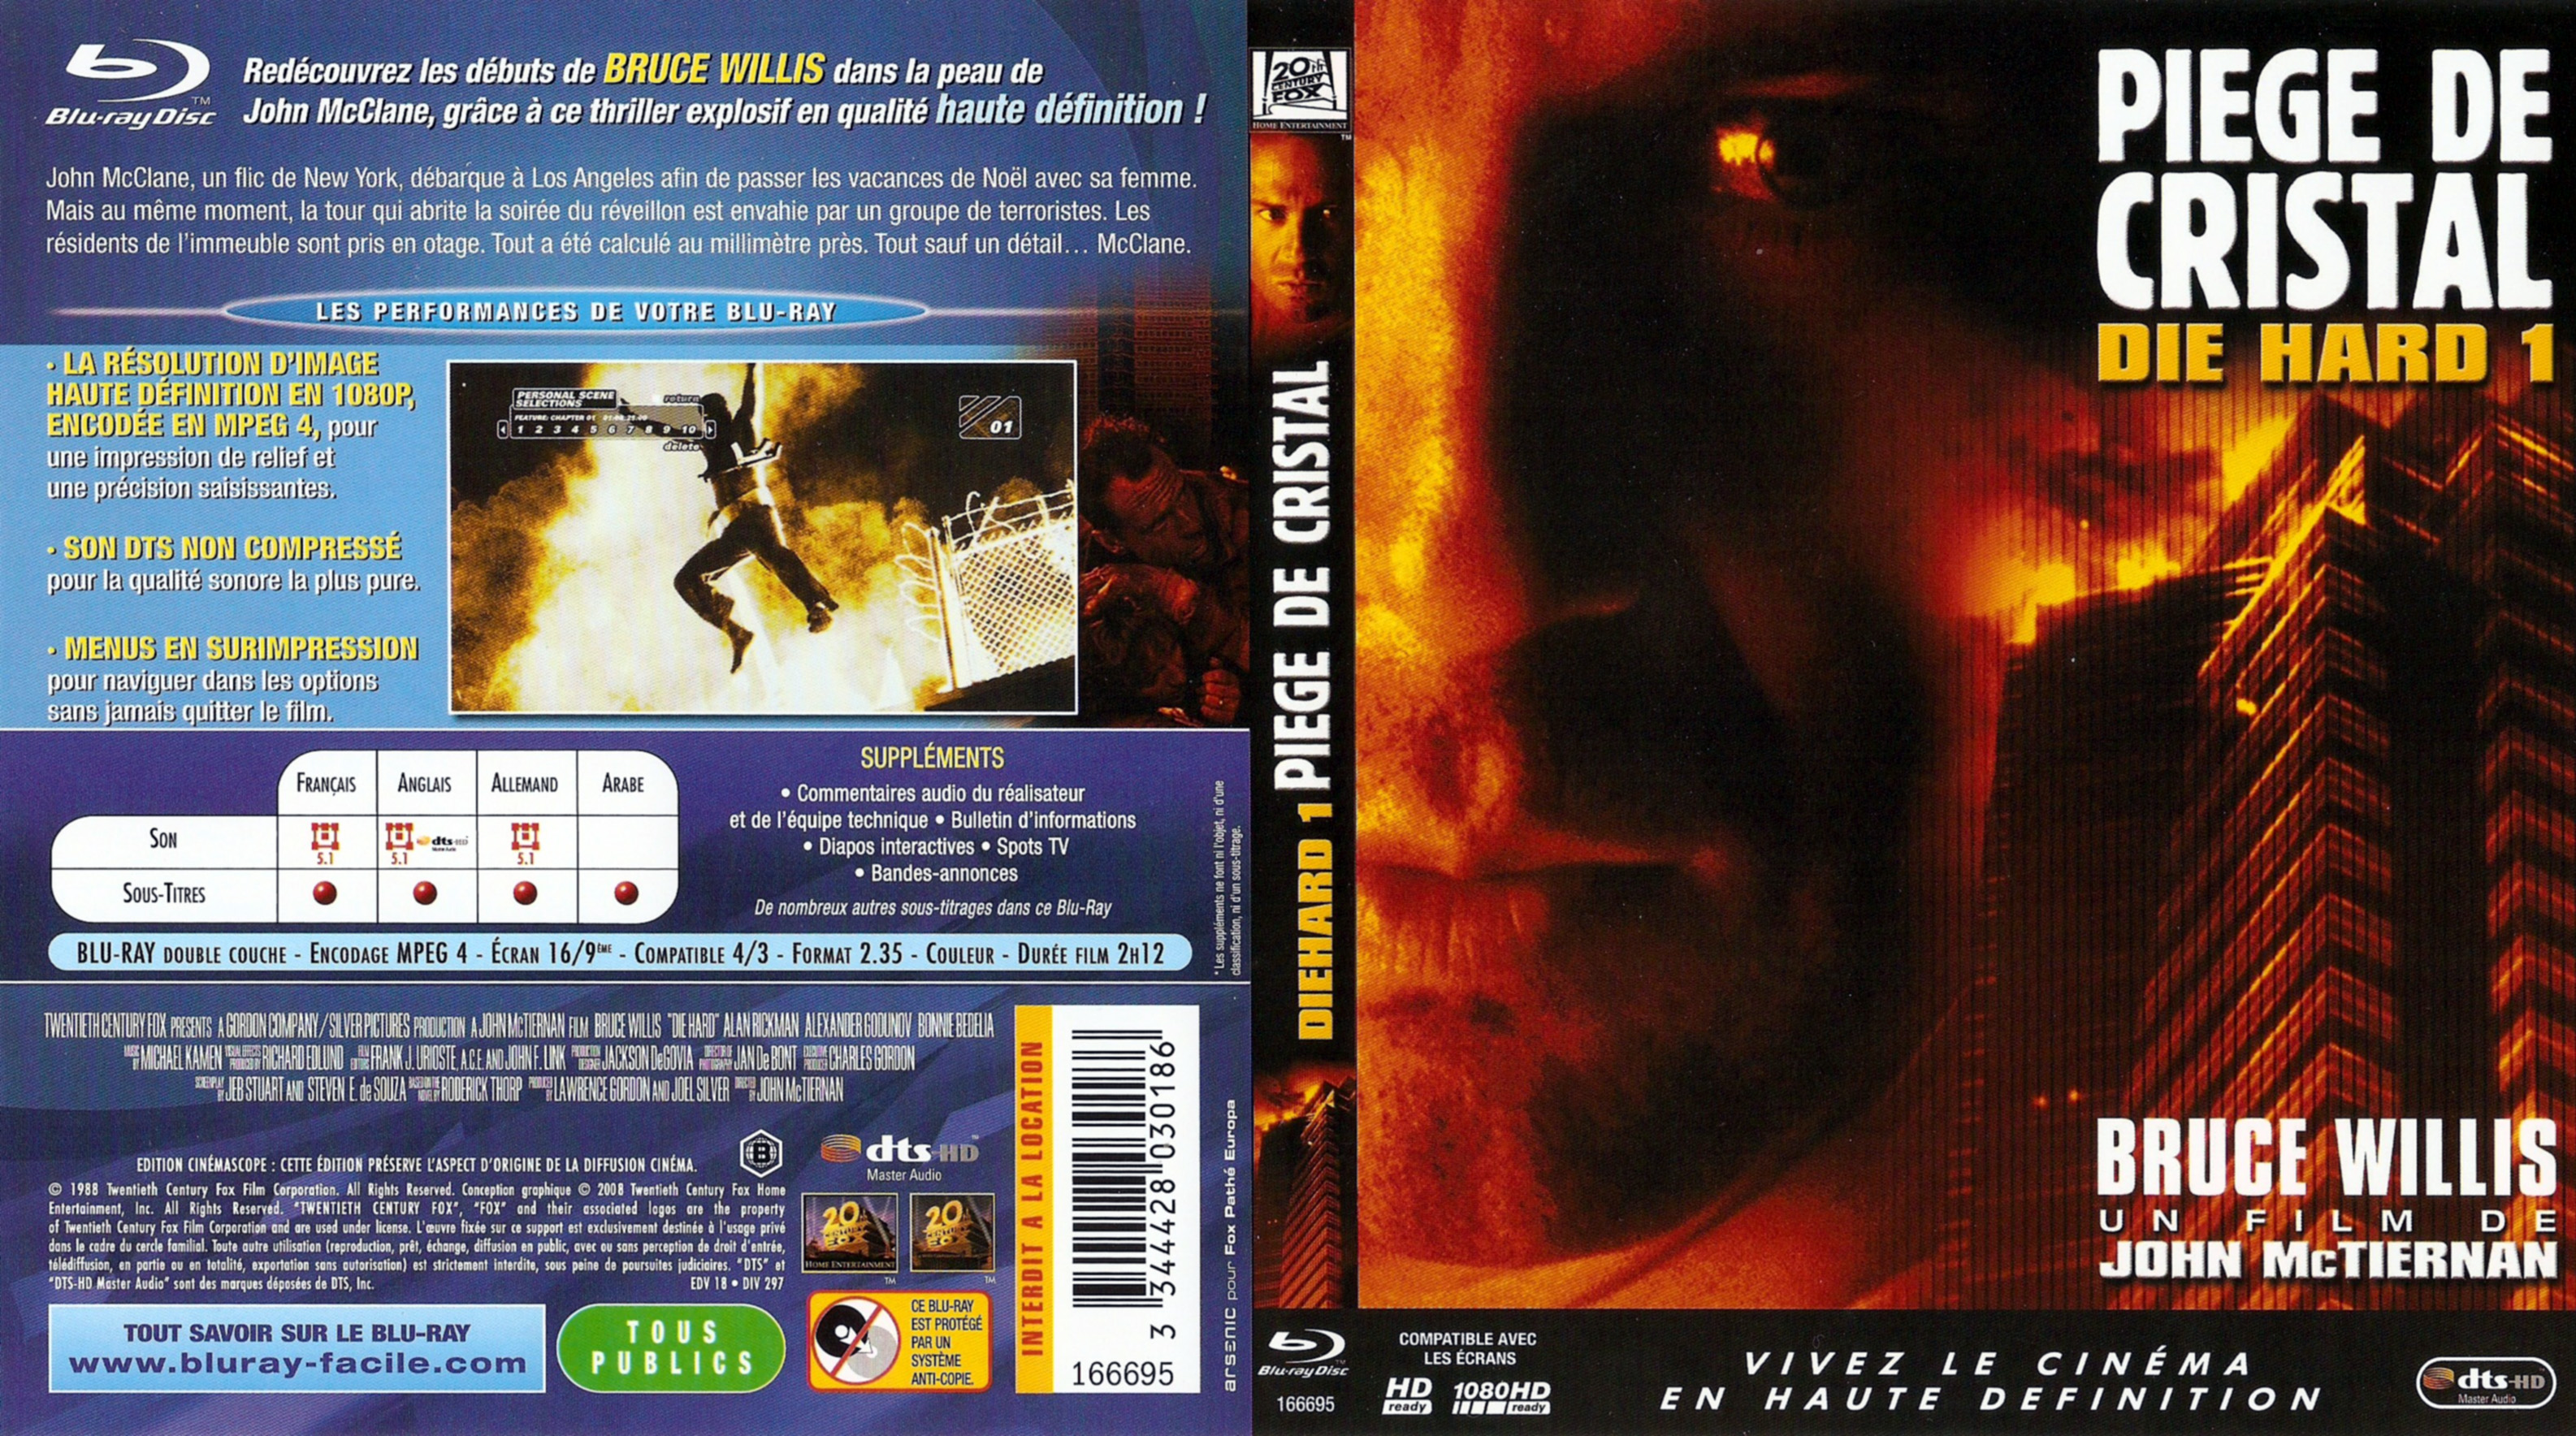 Jaquette DVD Die hard - Piege de cristal (BLU-RAY)